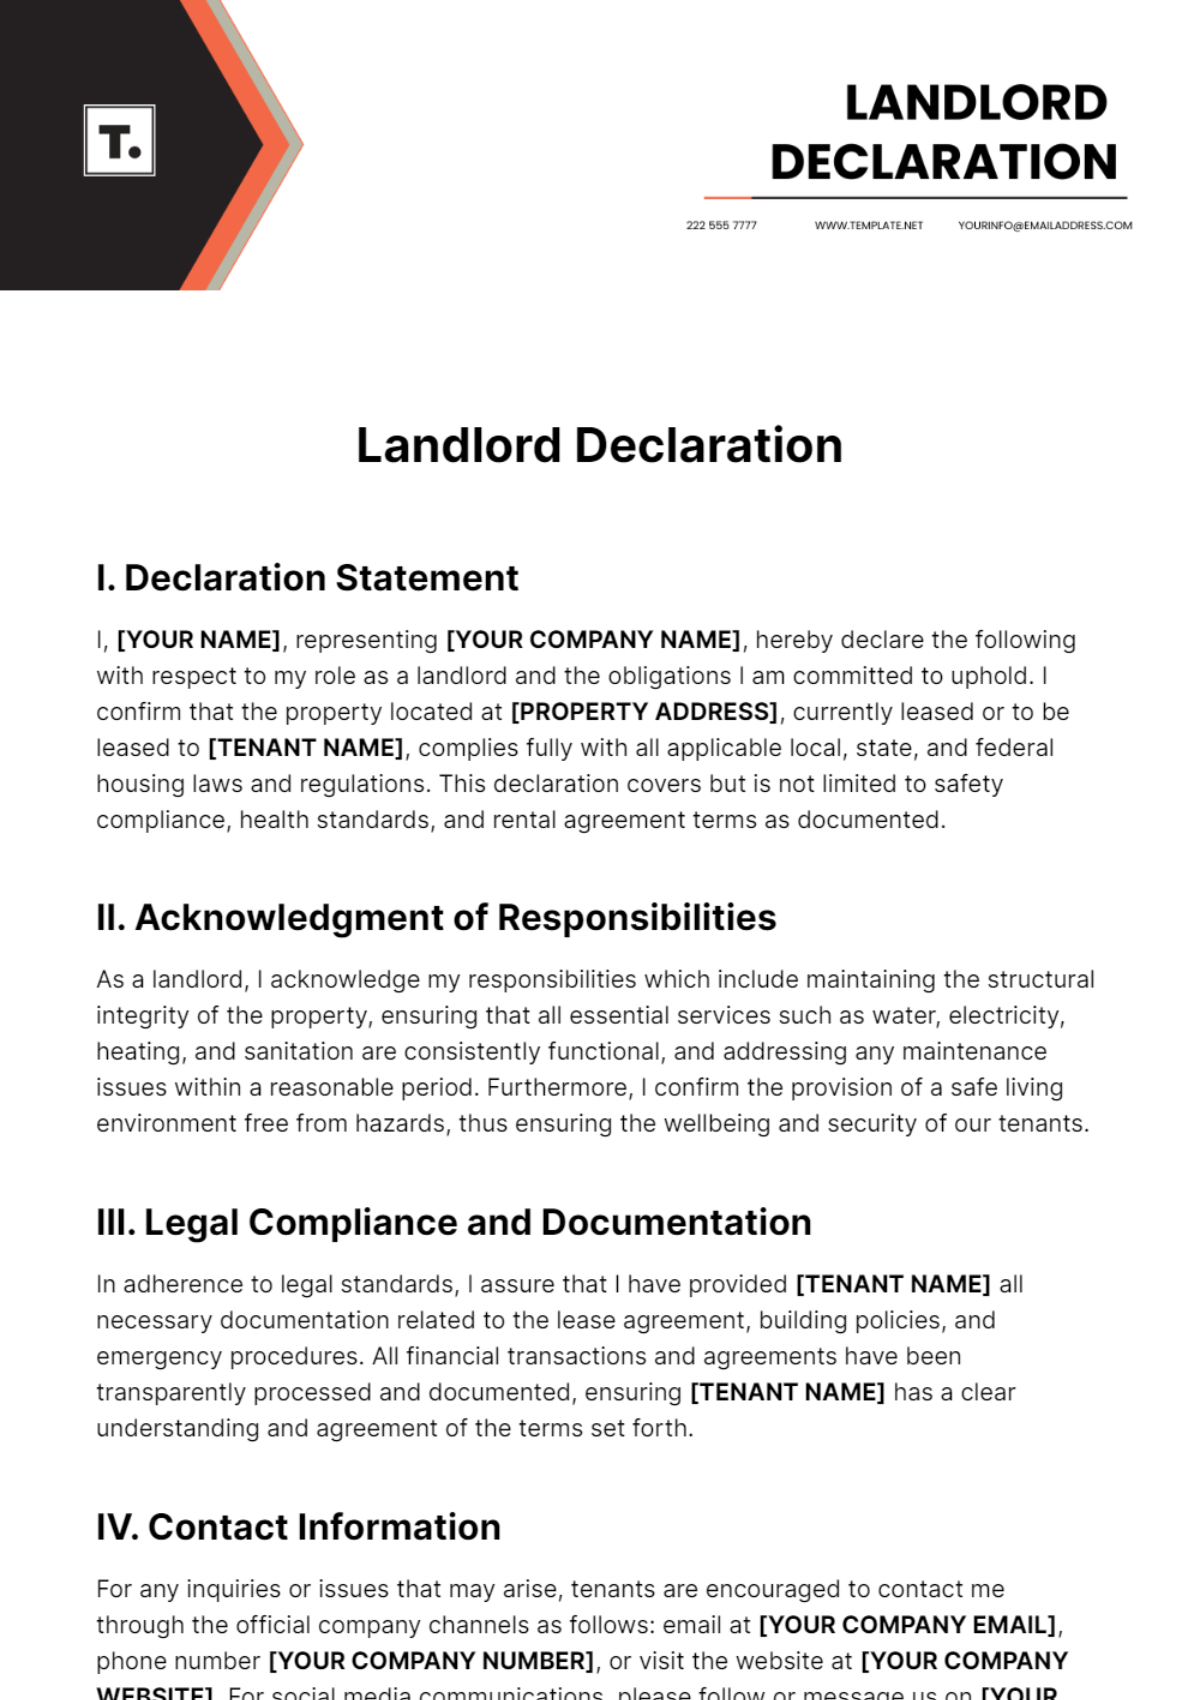 Free Landlord Declaration Template